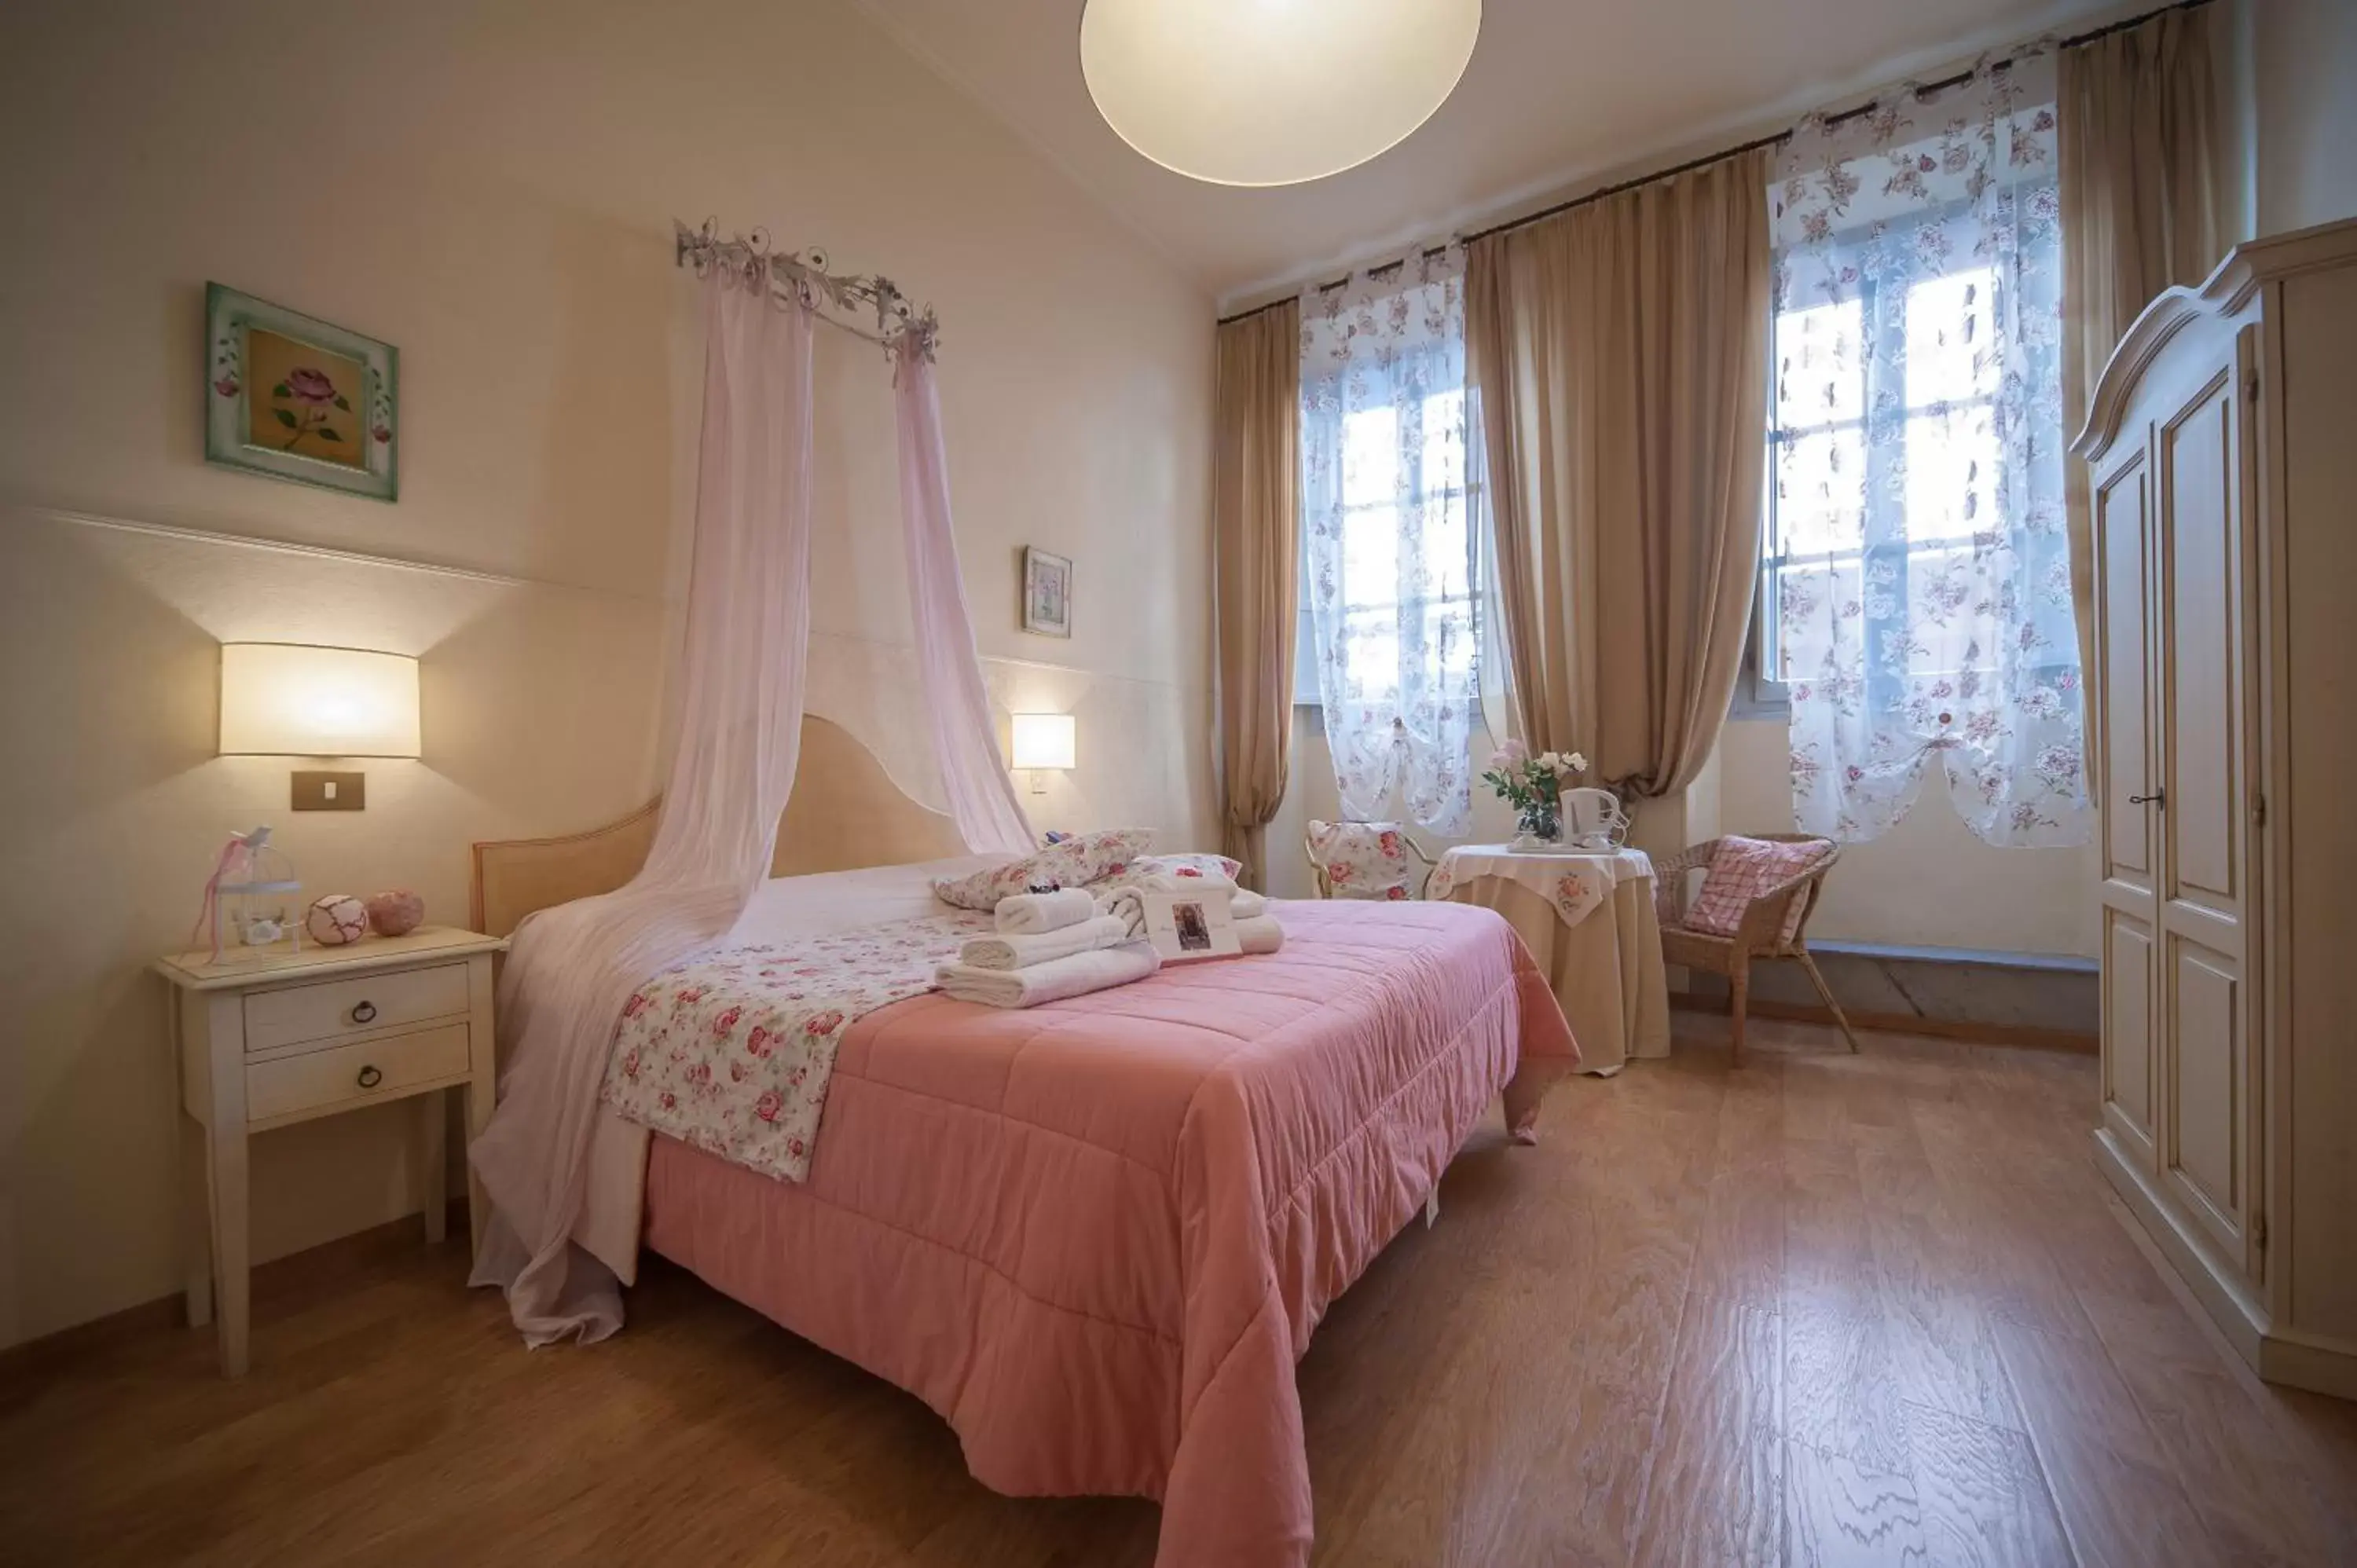 Bed, Room Photo in Albergo Etruria